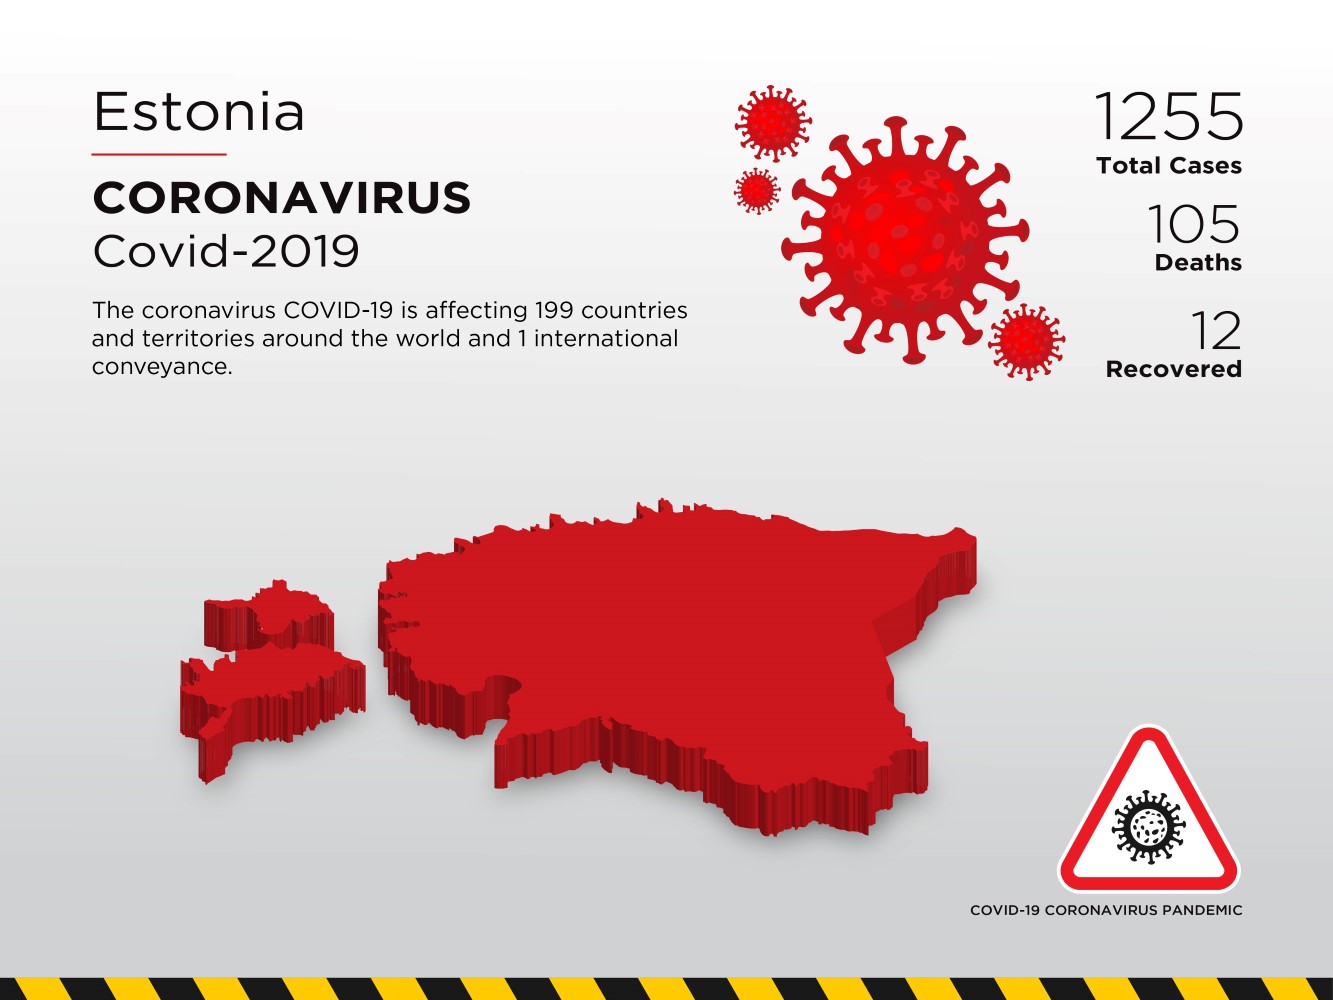 Estonia Affected Country 3D Map of Coronavirus Corporate Identity Template